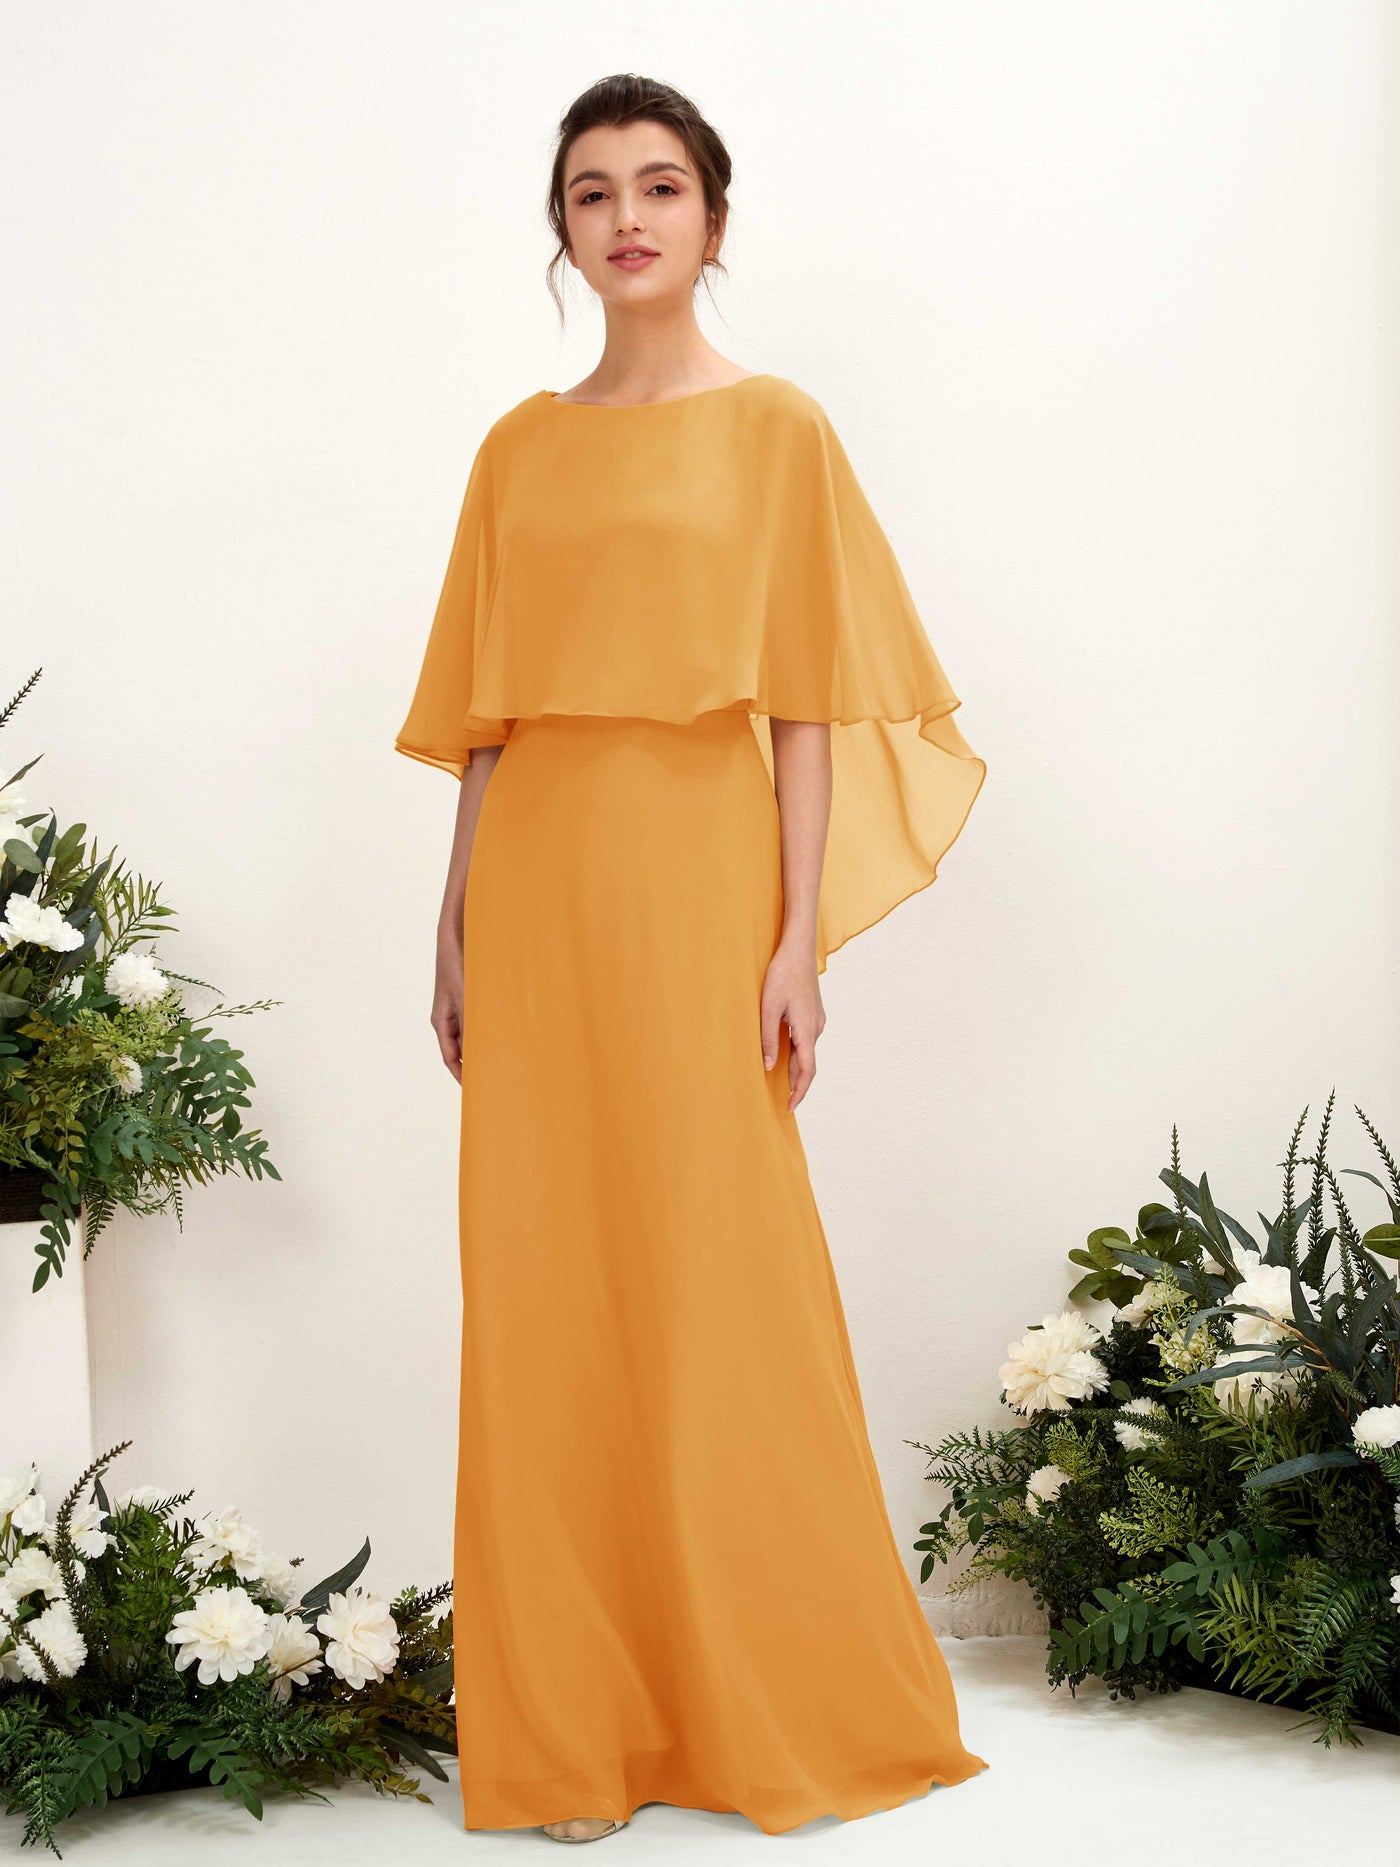 Mango Bridesmaid Dresses Bridesmaid Dress A-line Chiffon Bateau Full Length Sleeveless Wedding Party Dress (81222002)#color_mango